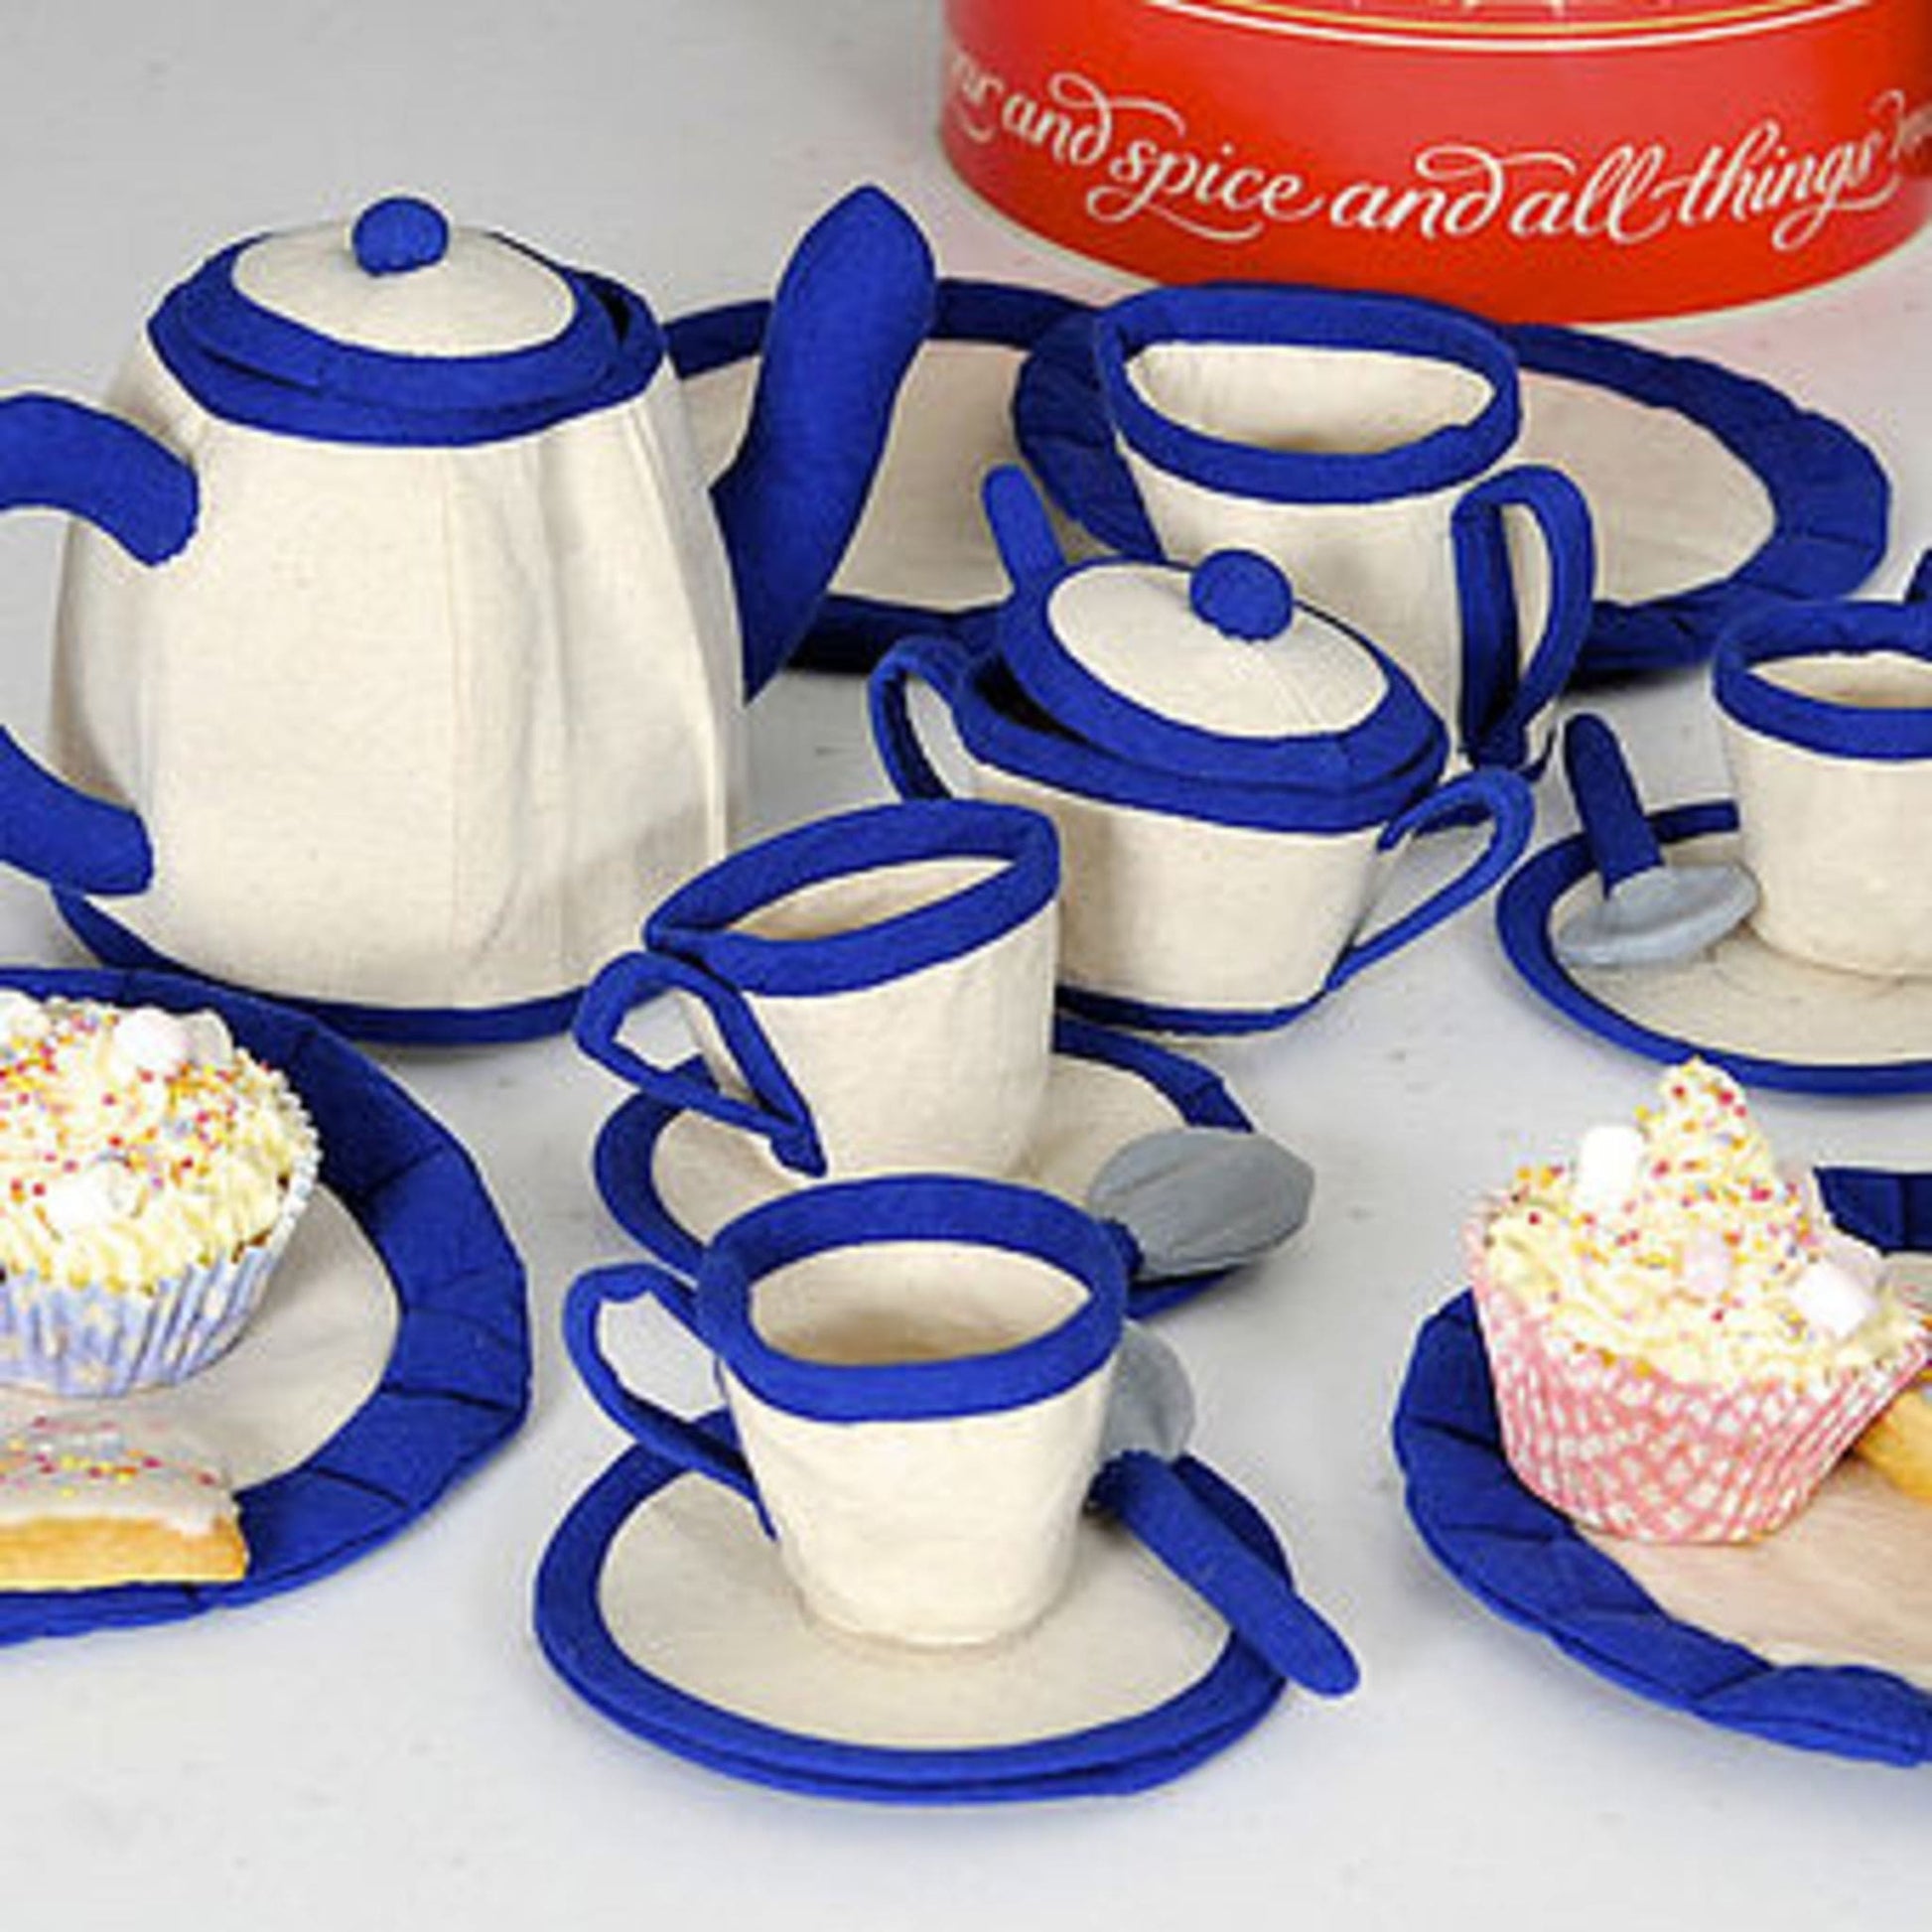 Fair trade cotton tea party toy tea set from Weaving Hope